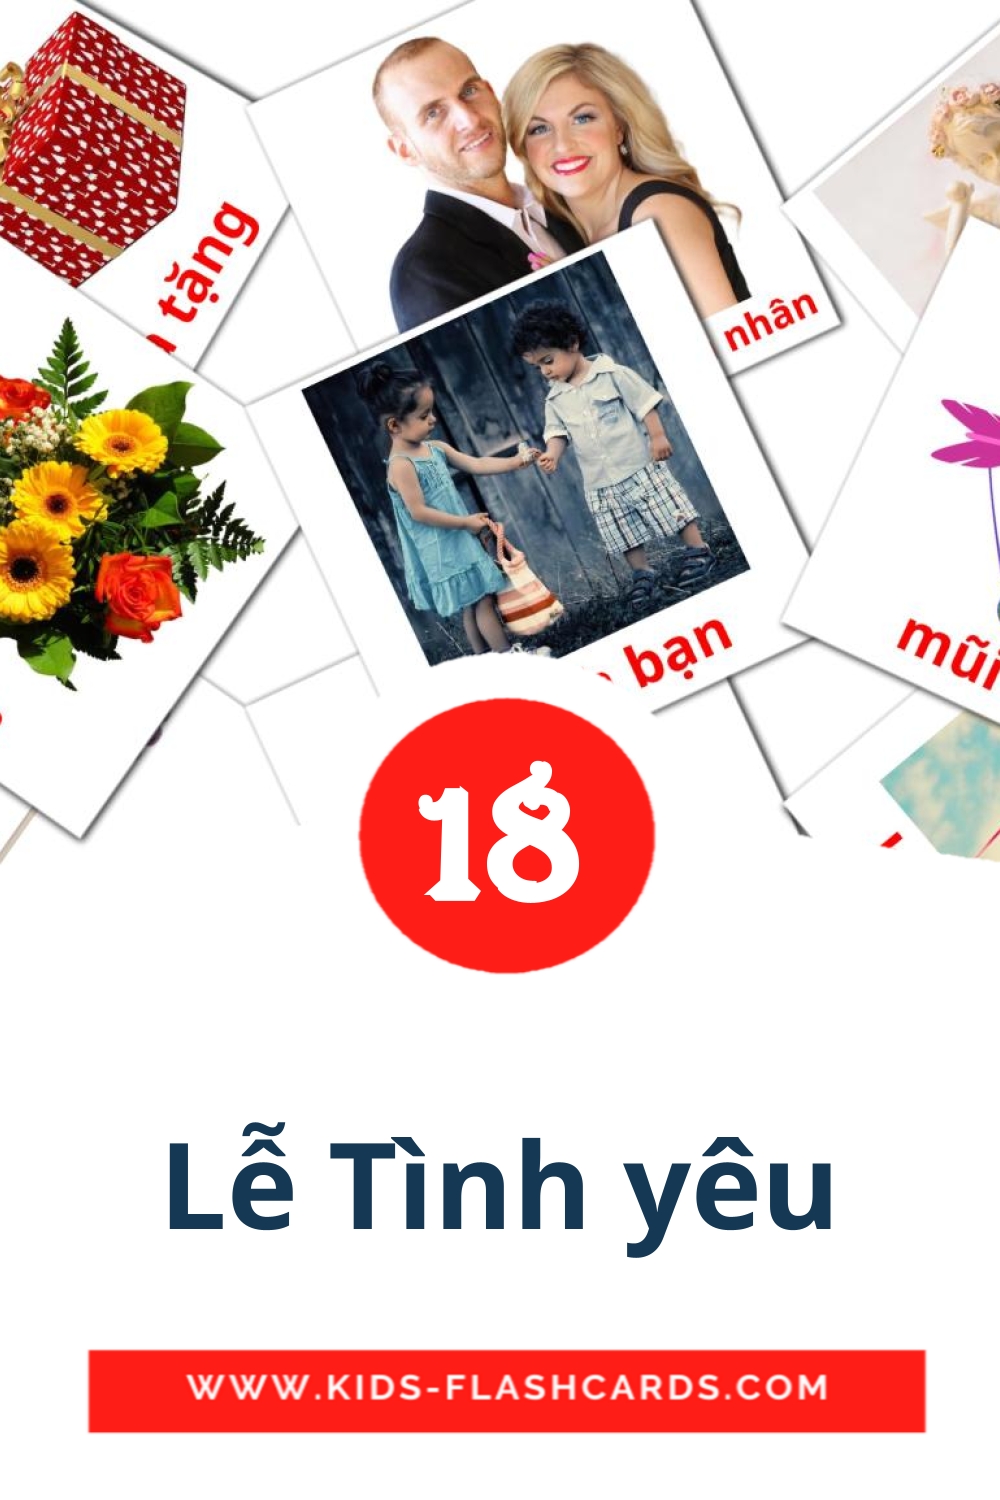 18 carte illustrate di Lễ Tình yêu per la scuola materna in vietnamita